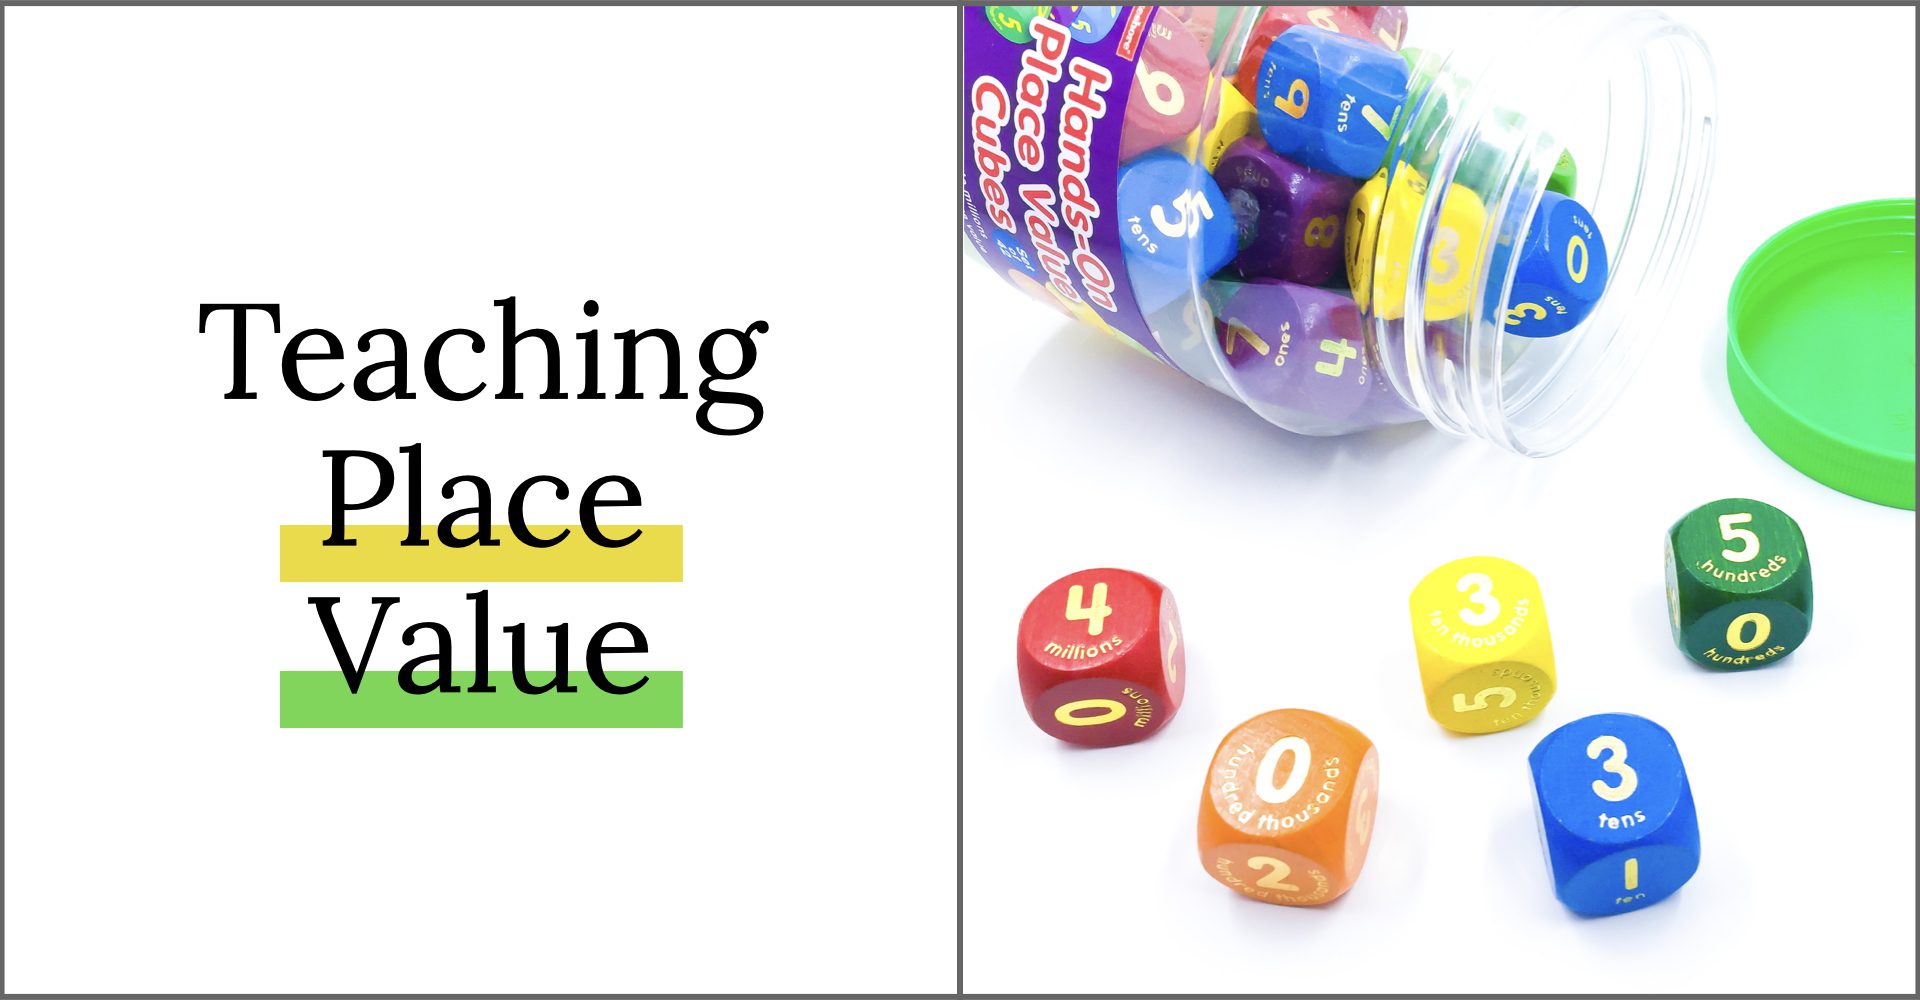 & Place Value Board Maths Teacher Resource Learning Unifix Cubes Blocks x50 